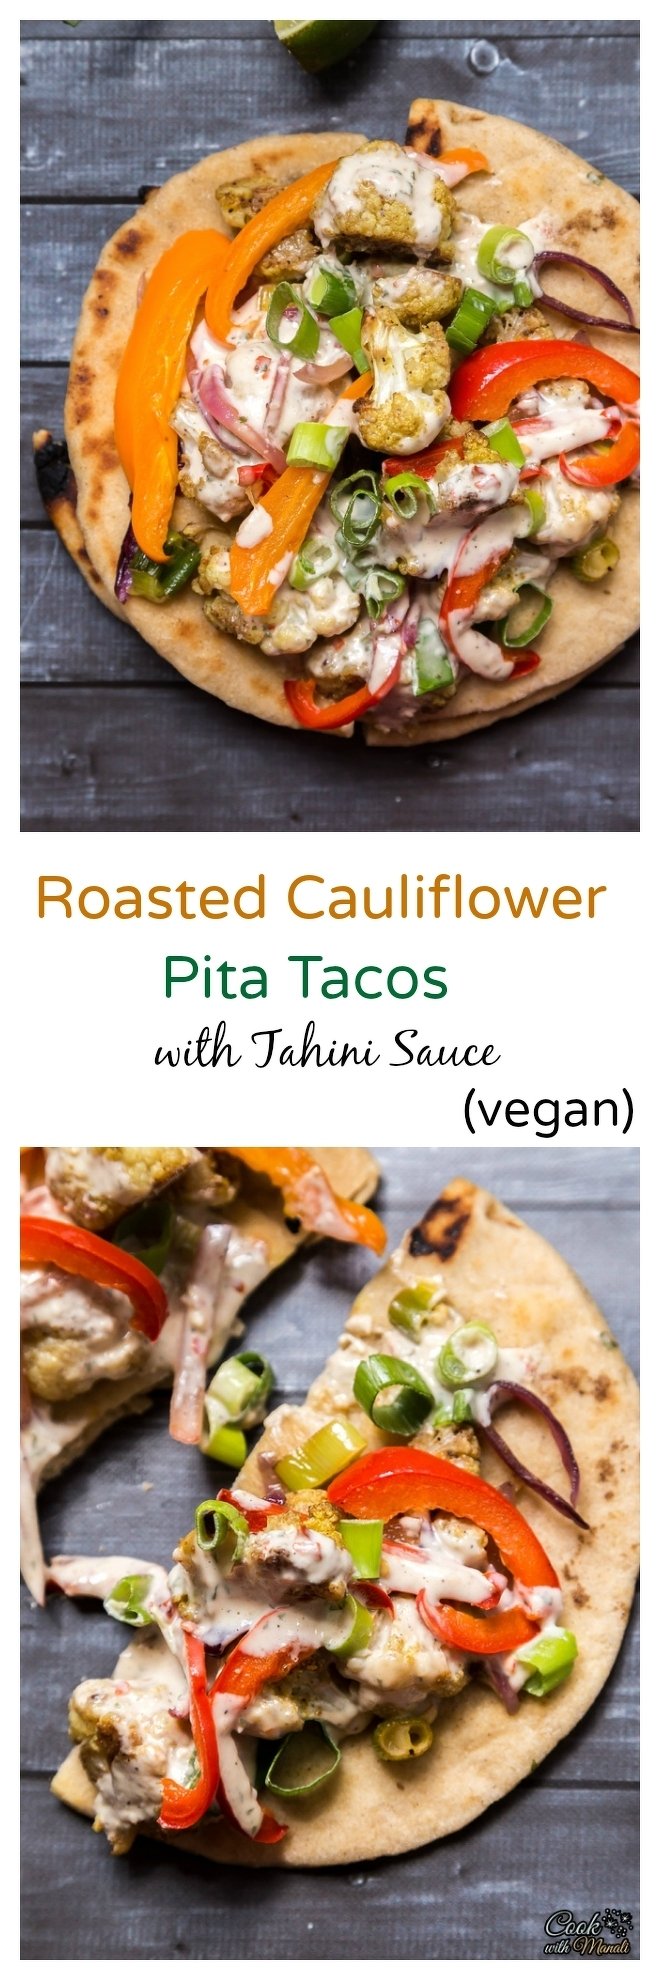 Roasted Cauliflower Pita Tacos Collage-nocwm